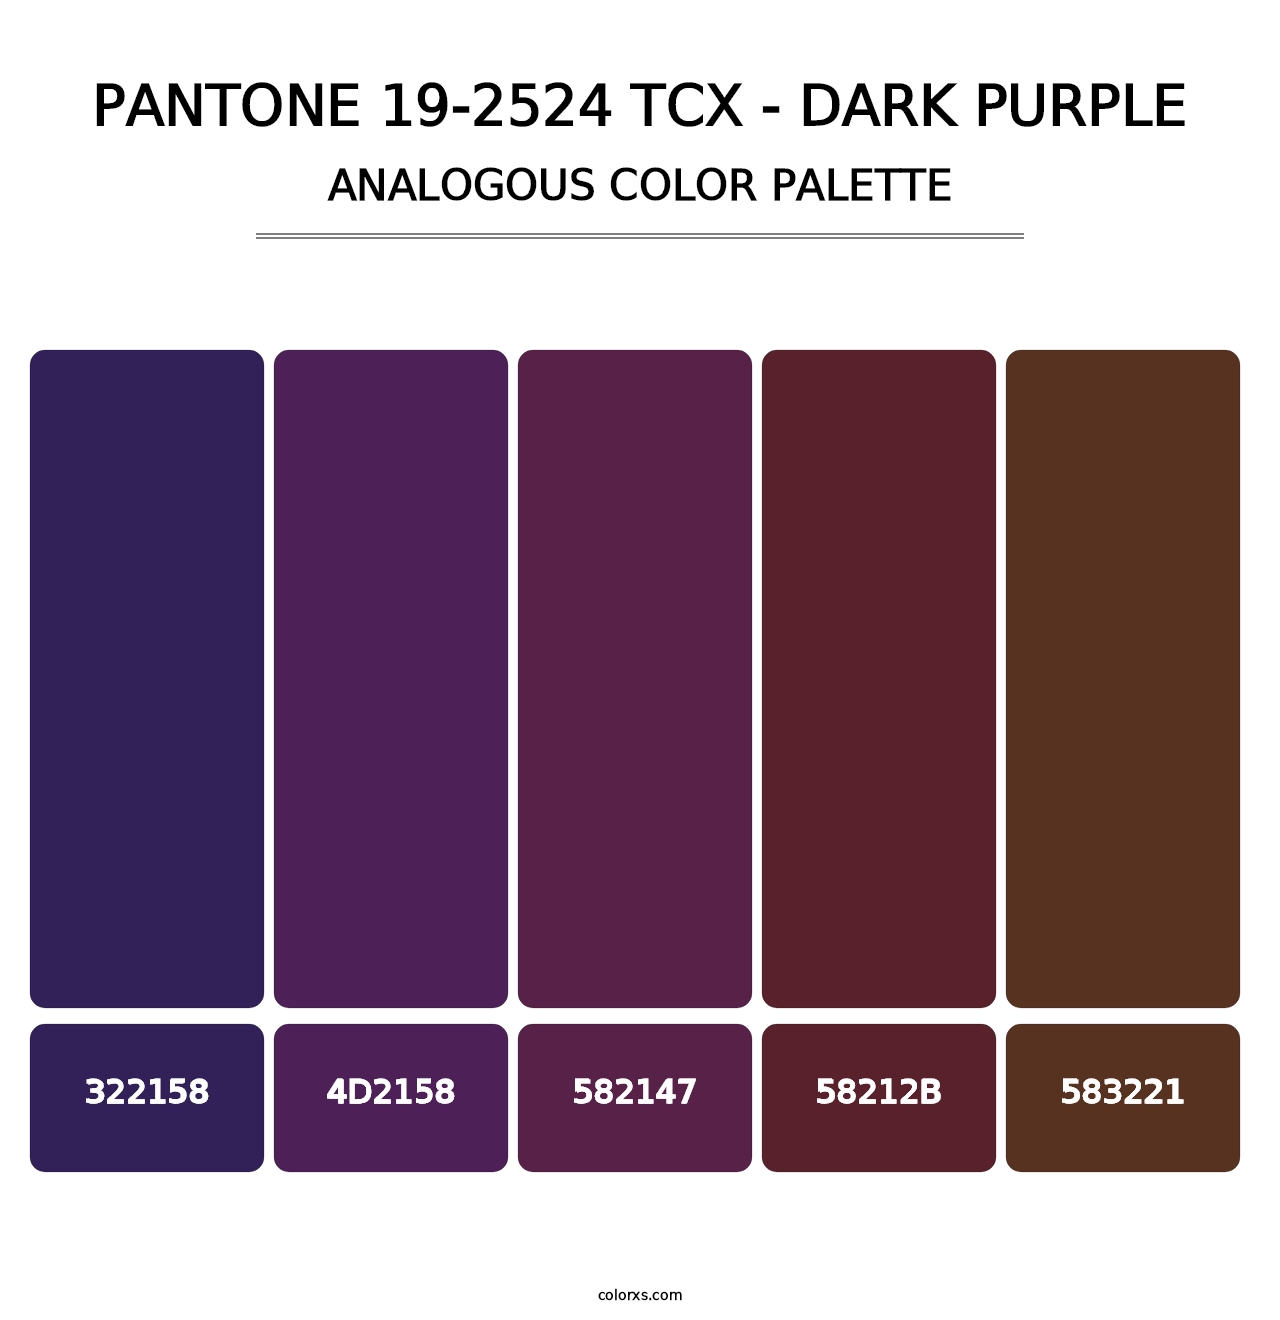 PANTONE 19-2524 TCX - Dark Purple - Analogous Color Palette